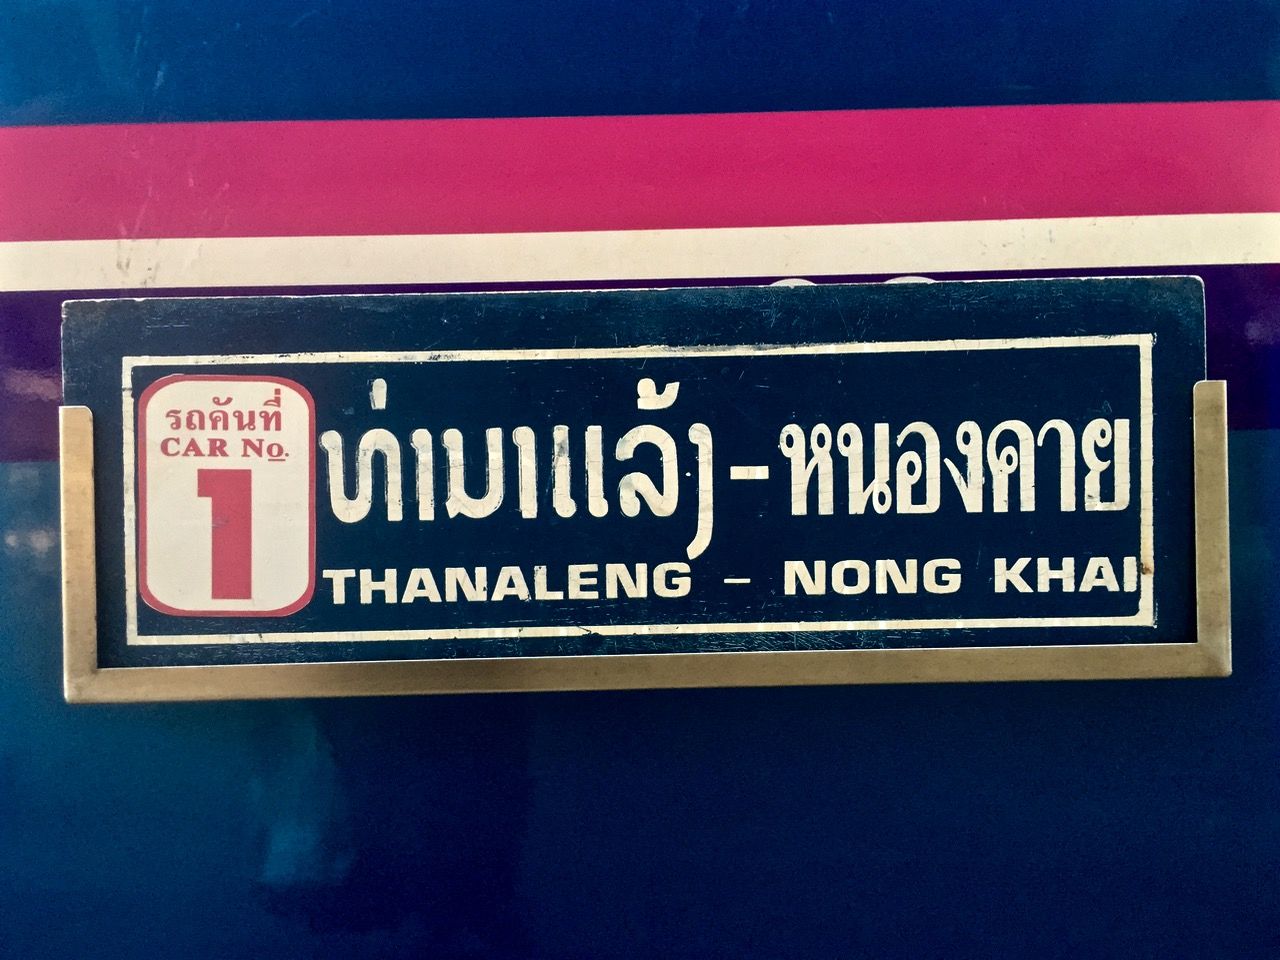 Plaque that reads "Thanaleng — Nong Khai"